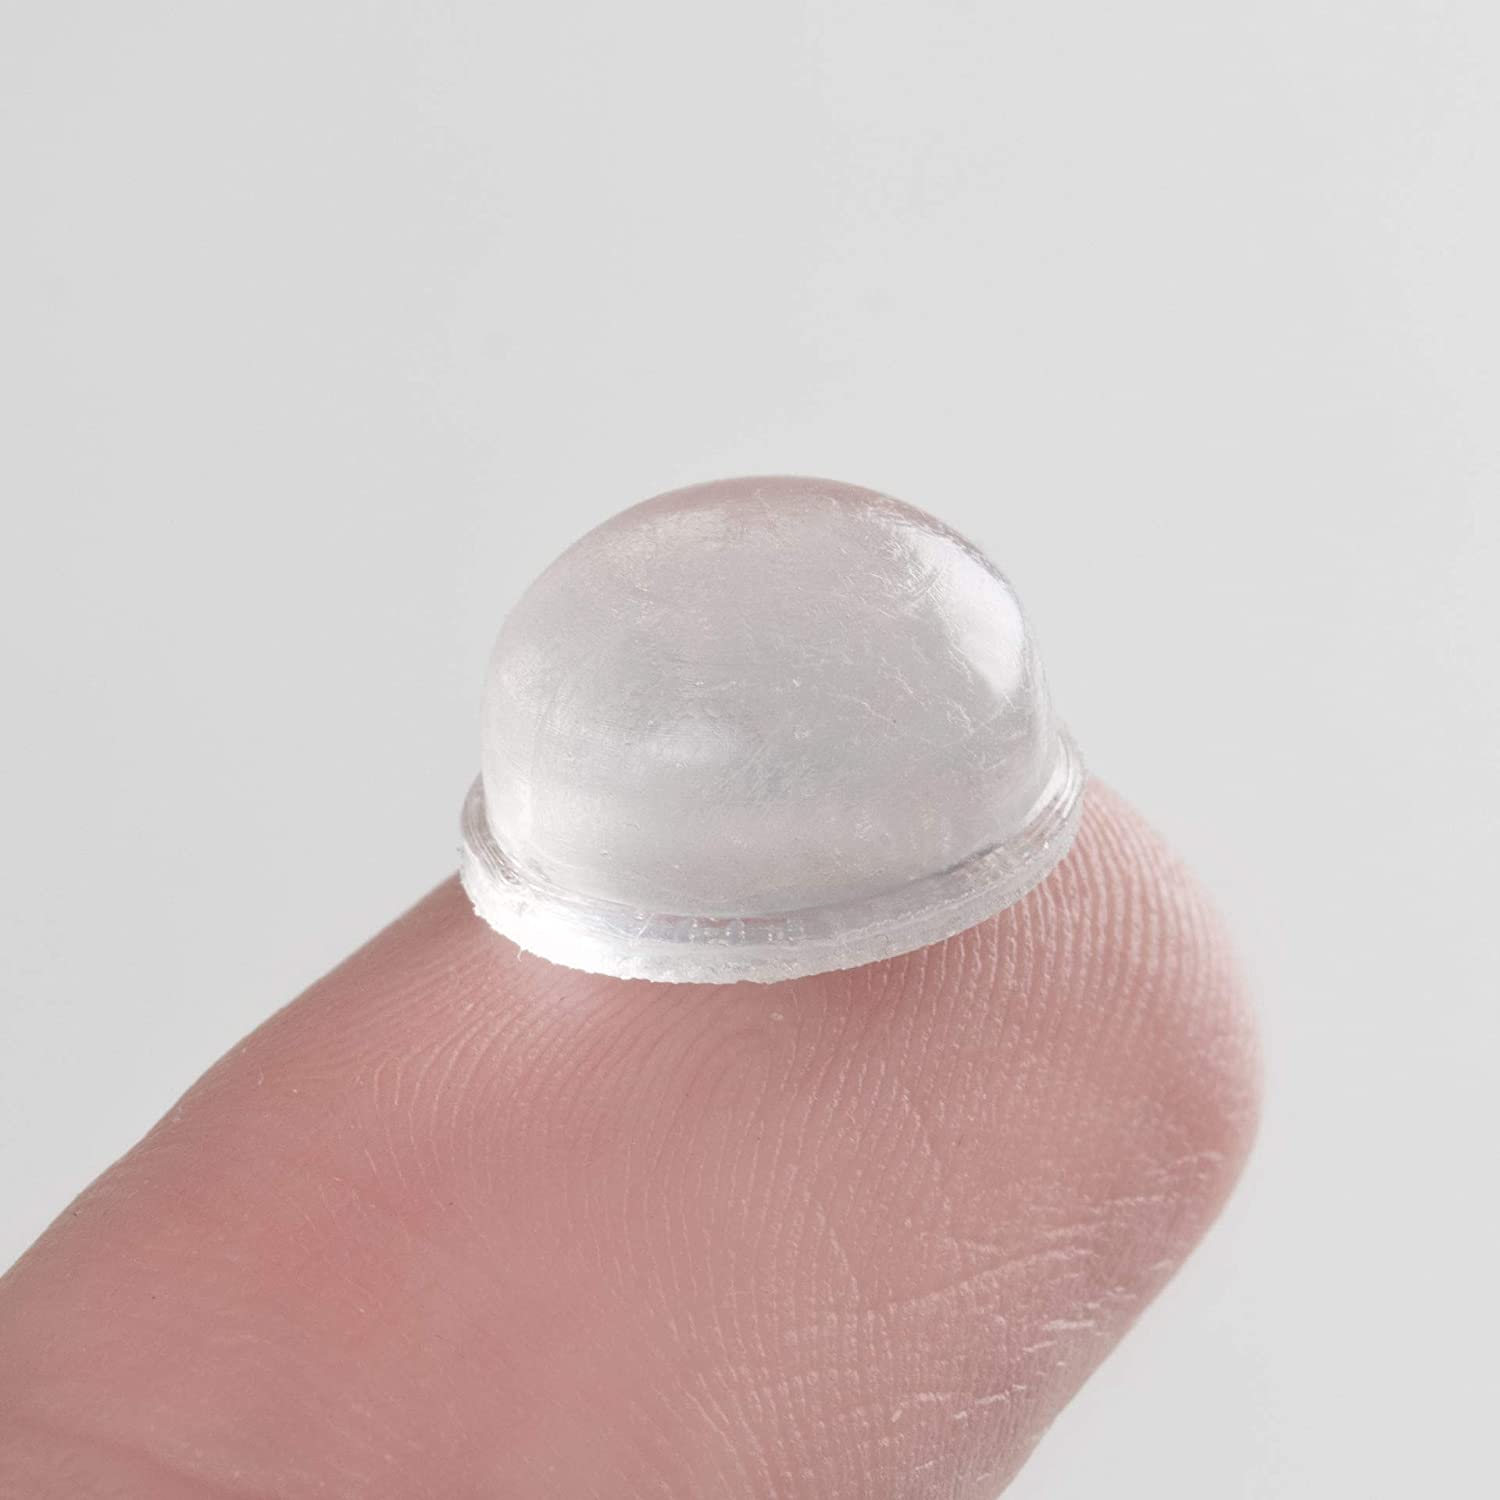 LouMaxx Gummipuffer - 20x Puffer transparent 13mm Ø - Gumminoppen für Glasplatten – Elastikpuffer transparent selbstklebend